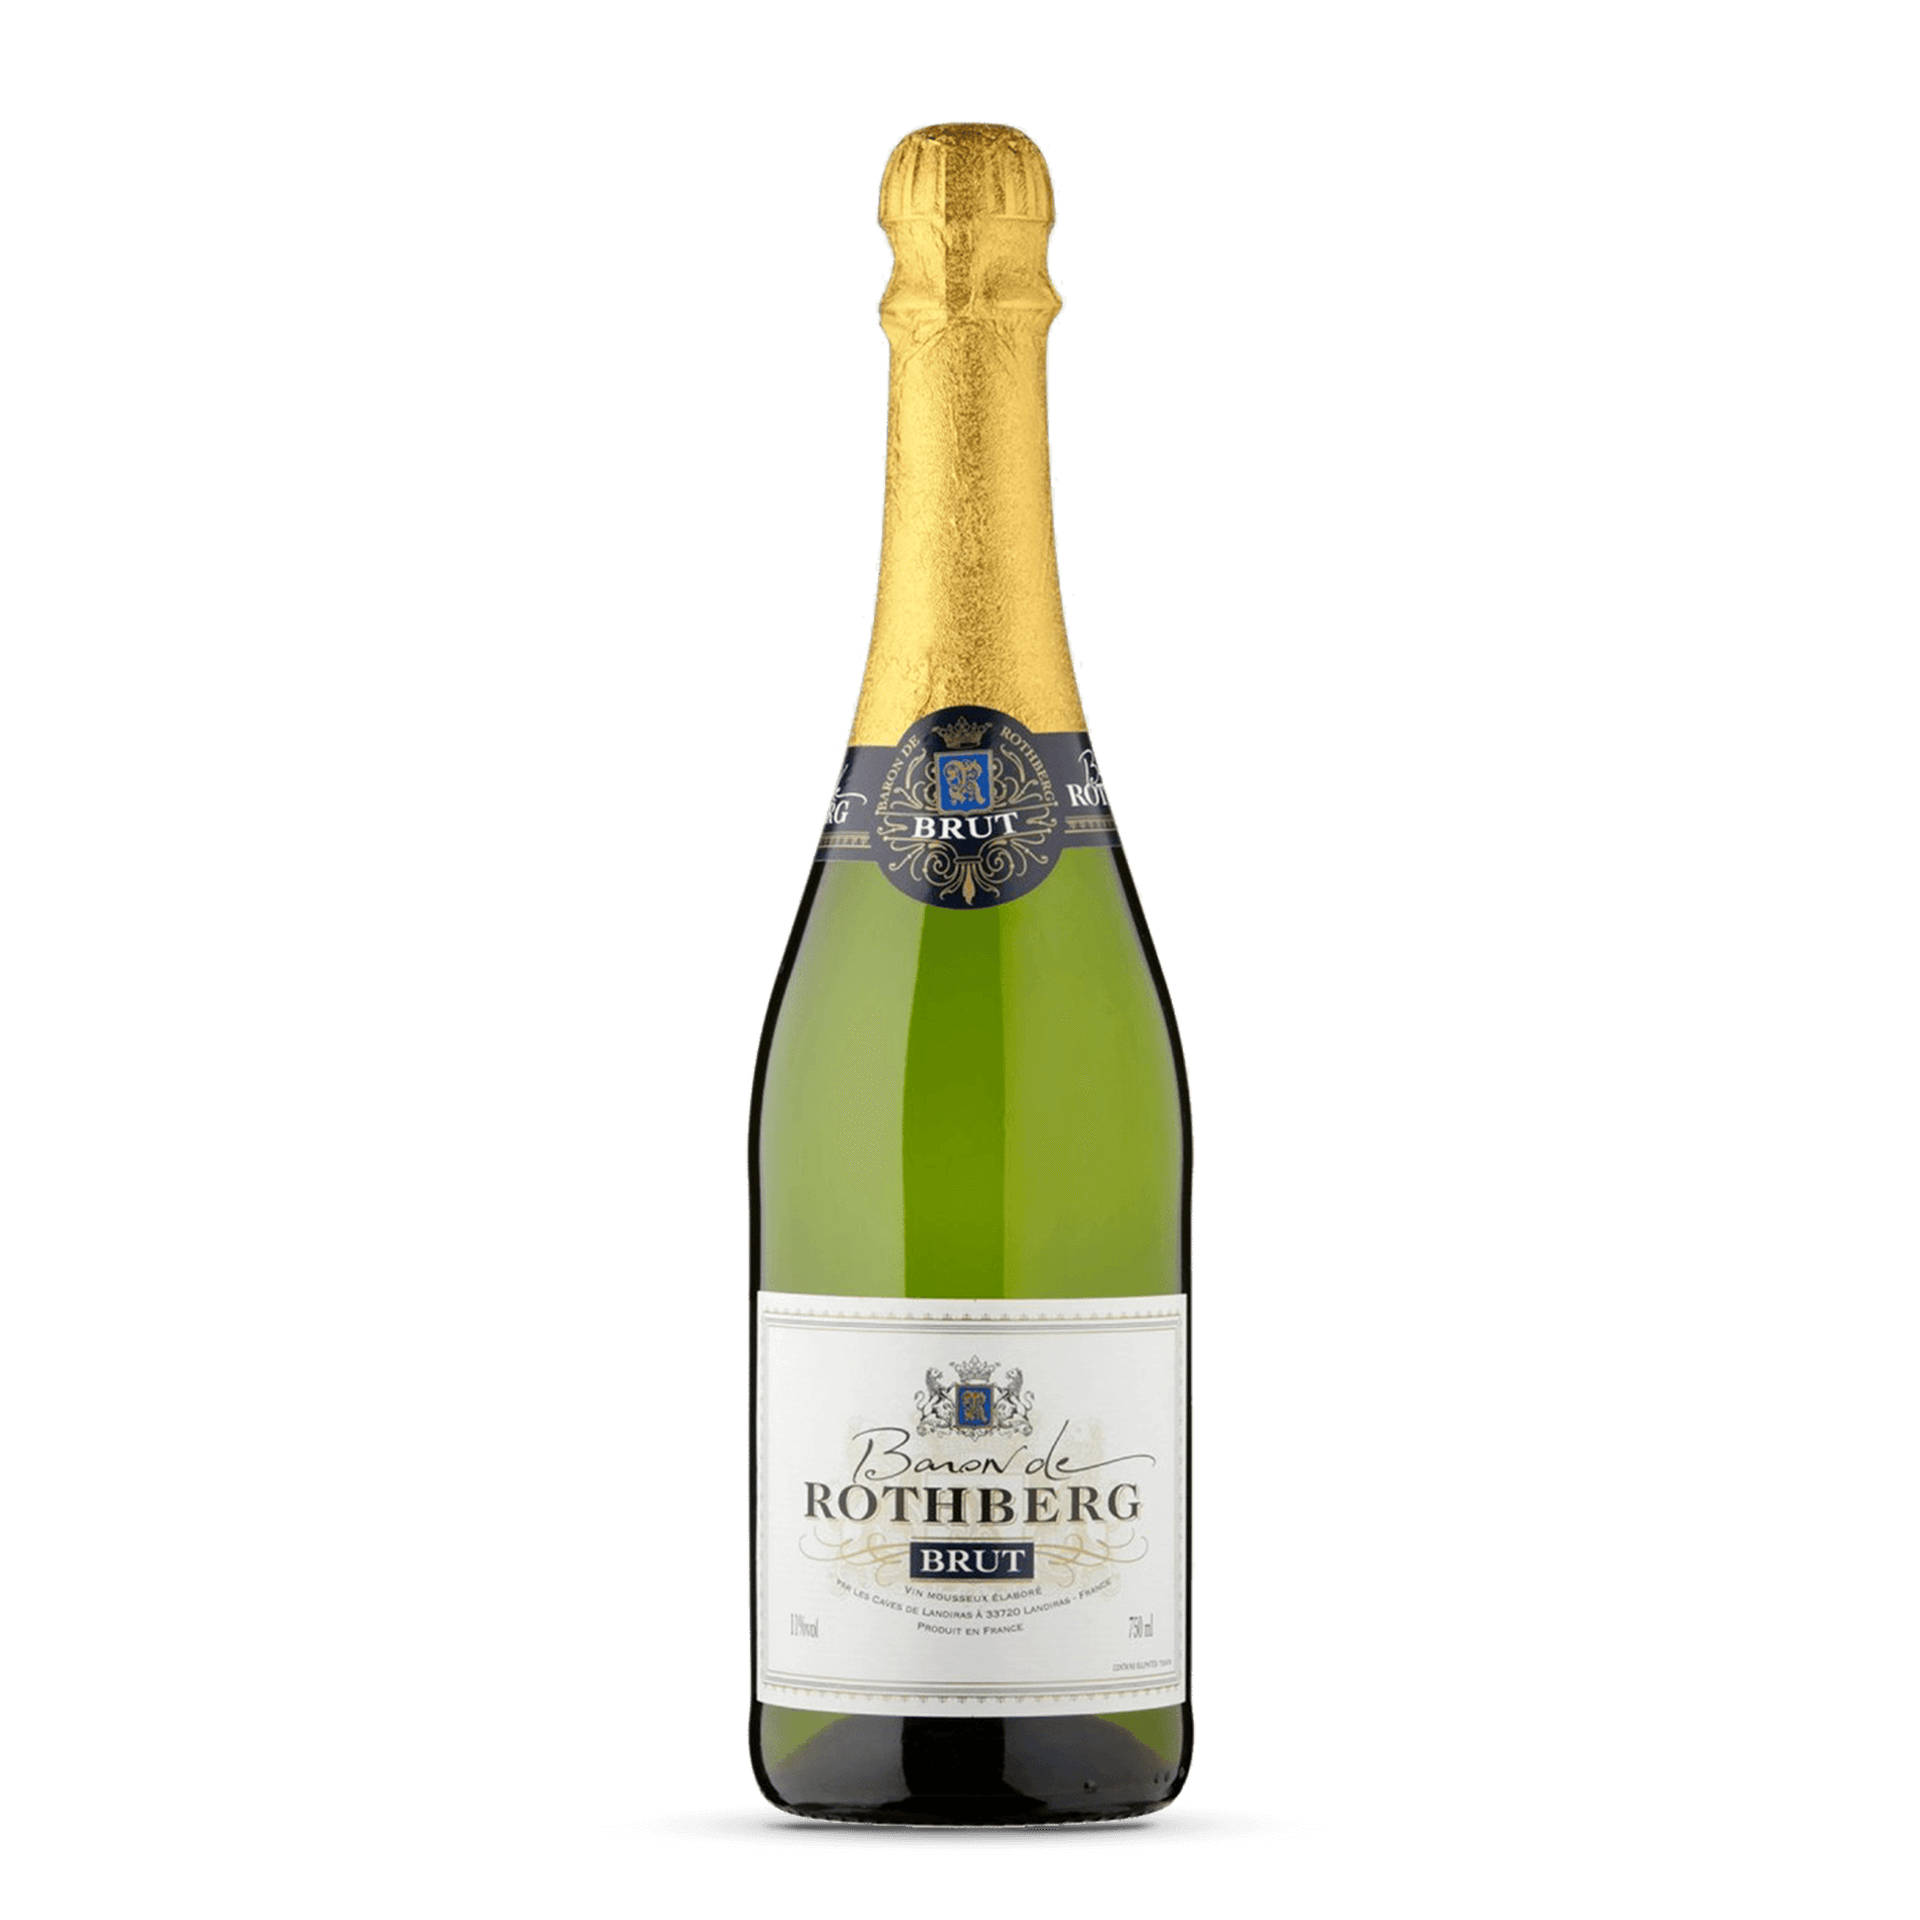 Rothberg Brut. Просекко Креман. Шампанское Deval Brut Cremant de Loire. Креман Долина Луары. Champagne brut цена